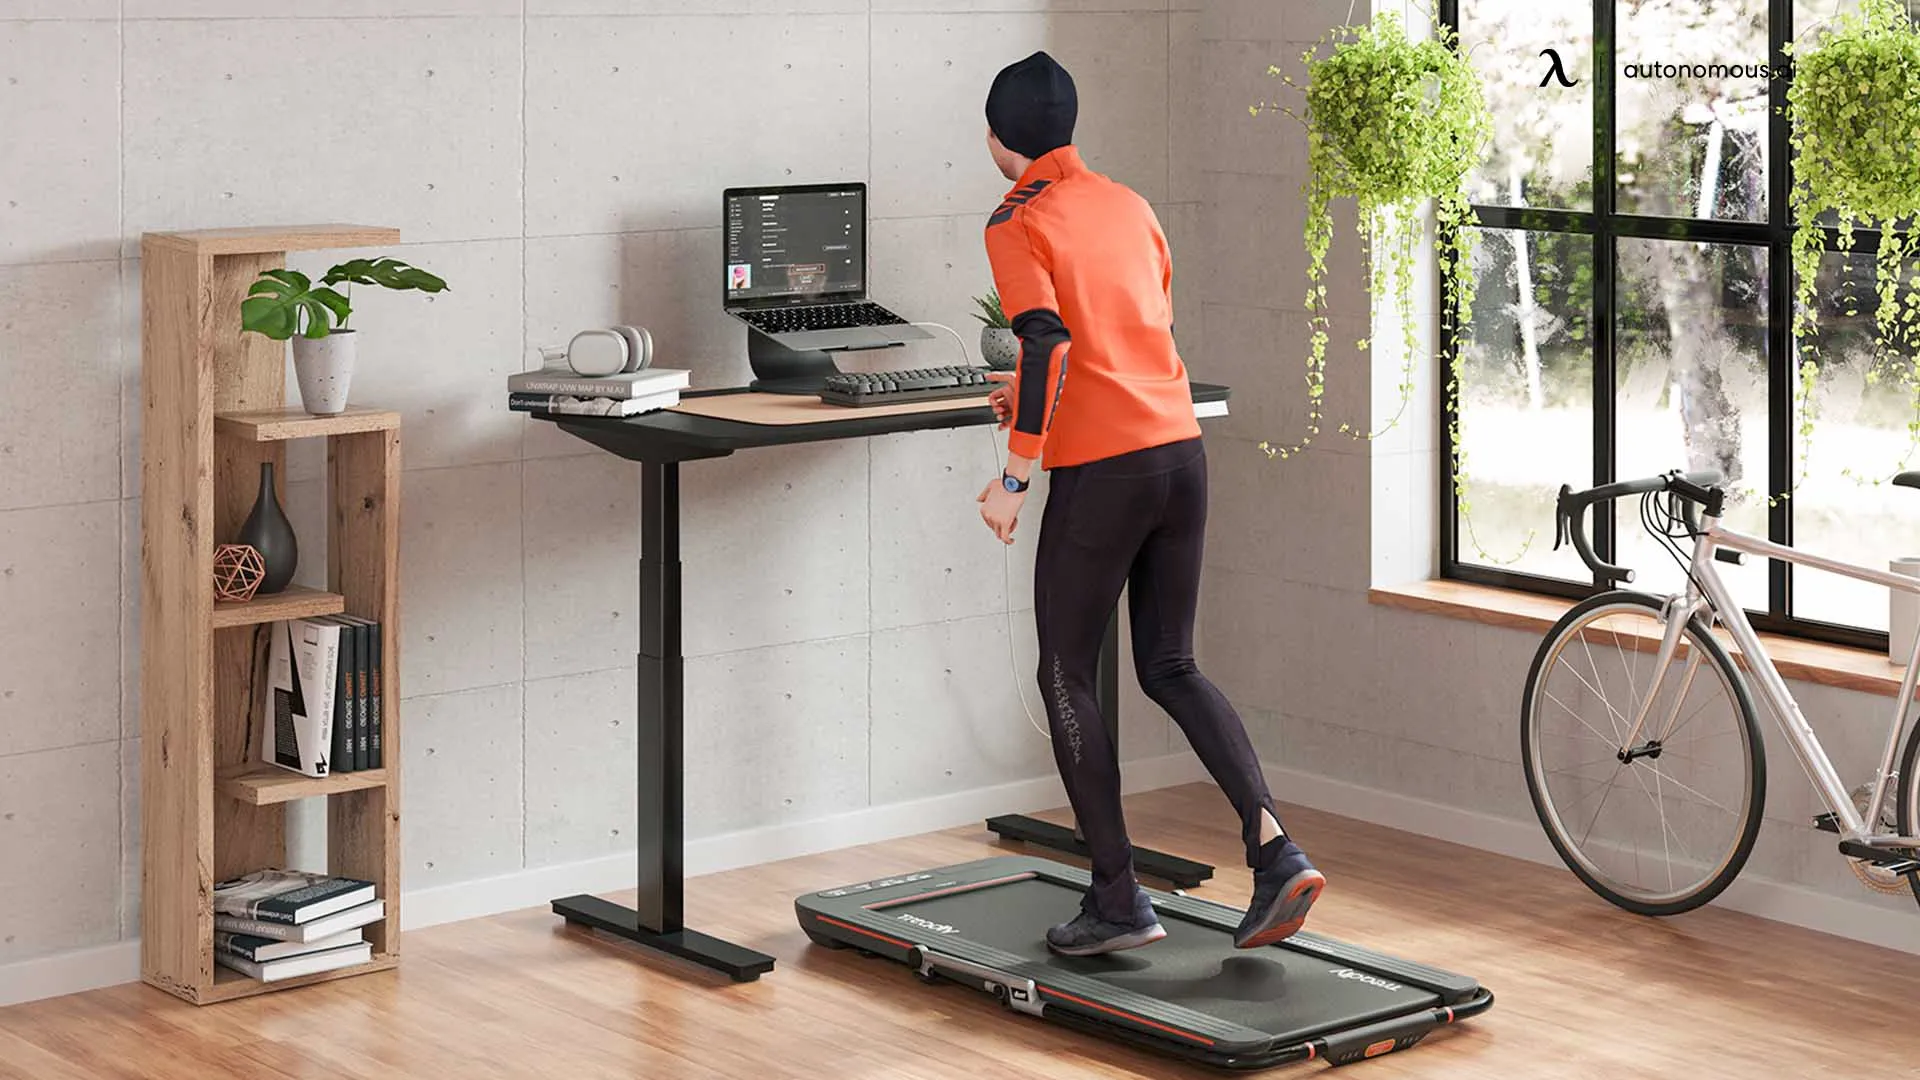 How to Choose the Right Treadmill? Black Friday treadmill deals